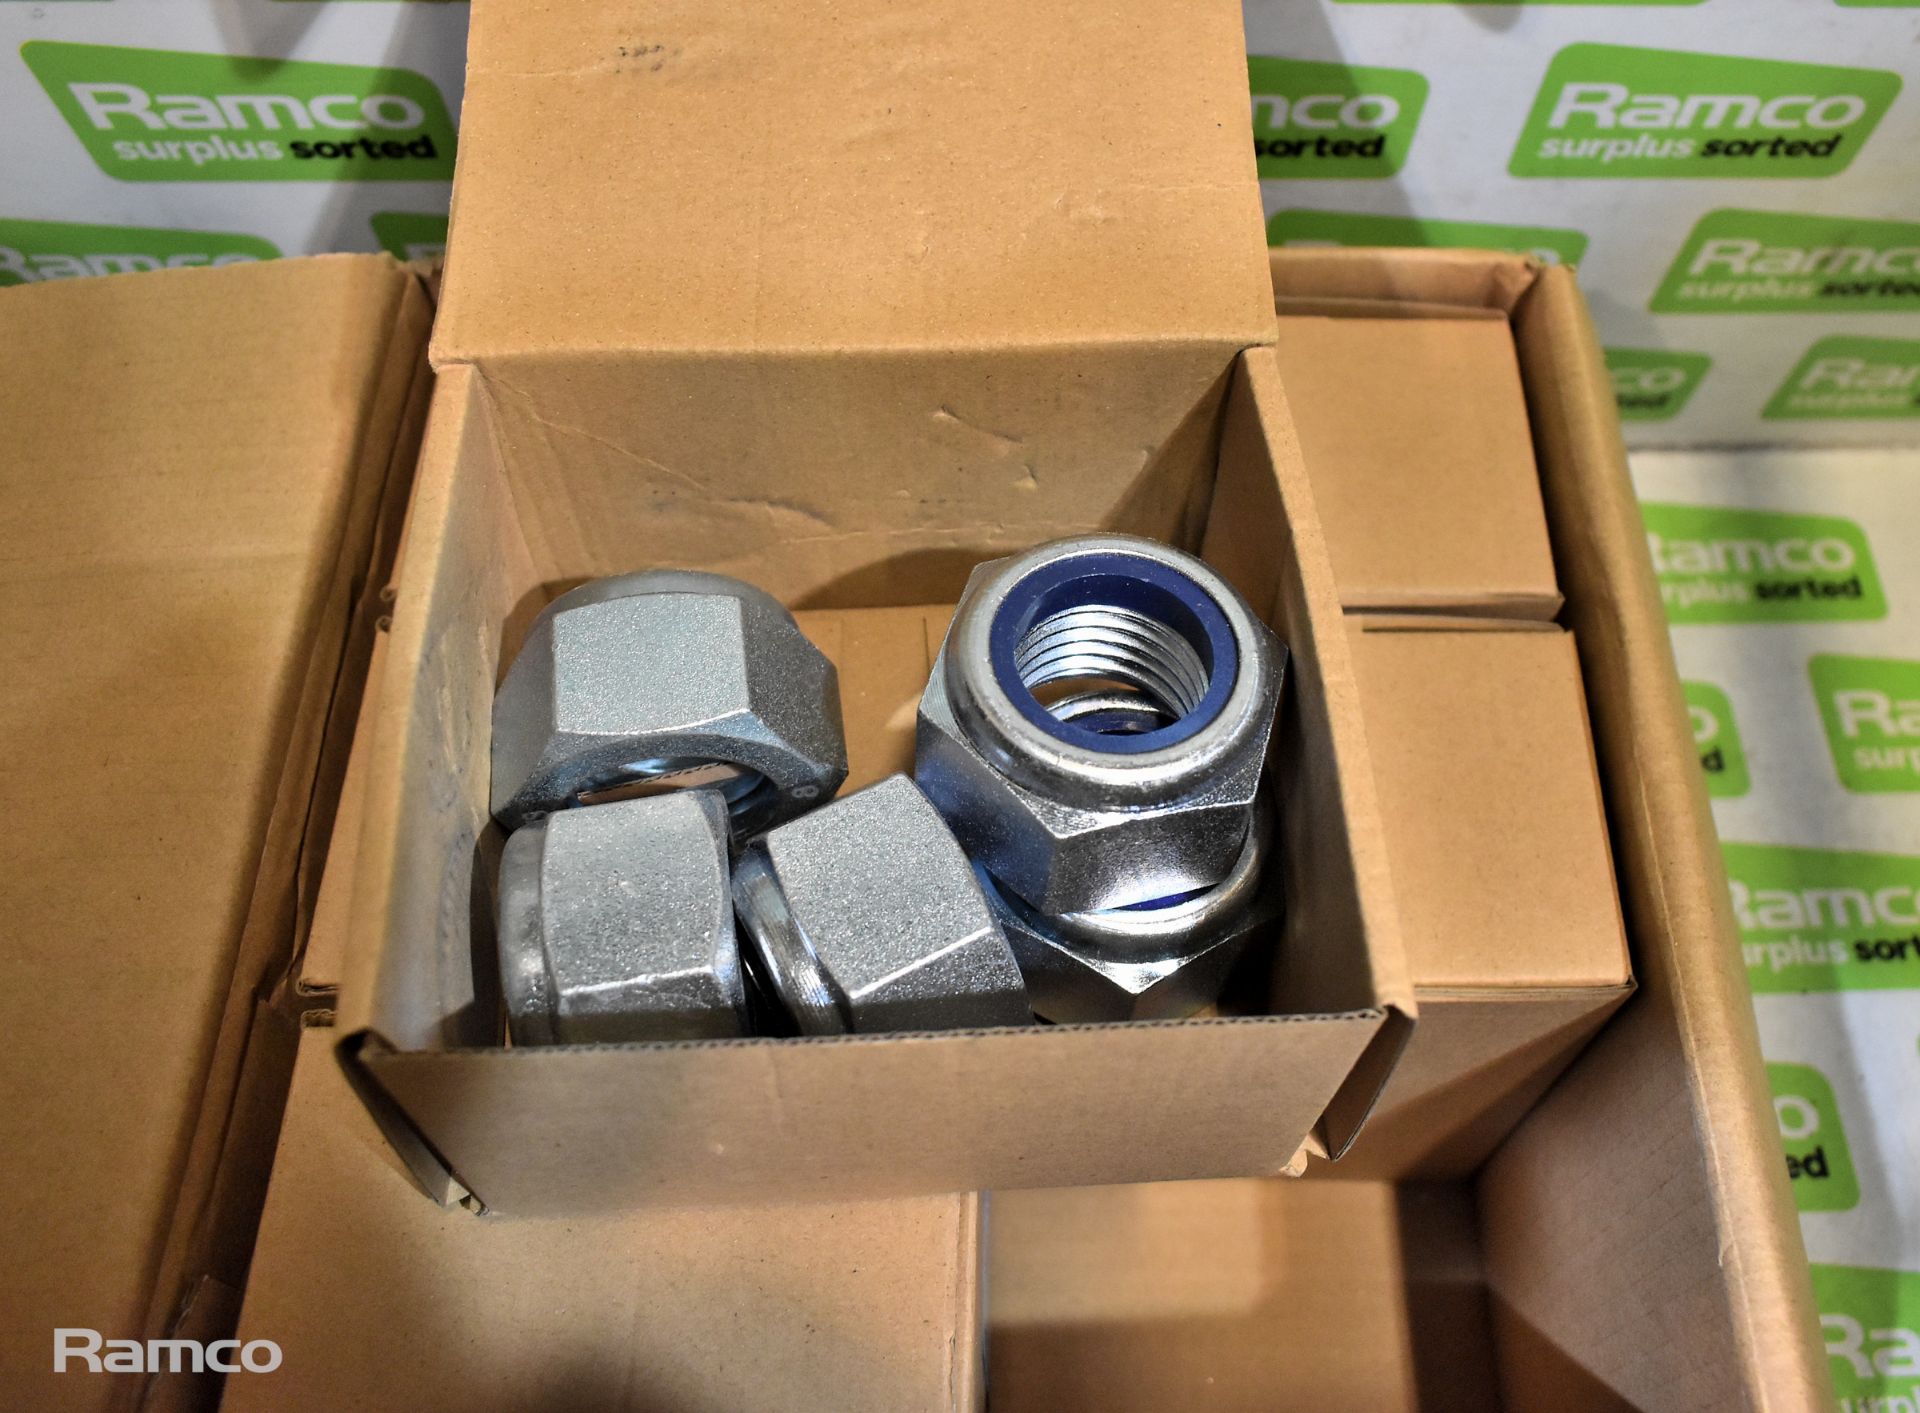 Fabory 36mm nylon insert locking nut - 1 box of approx 30